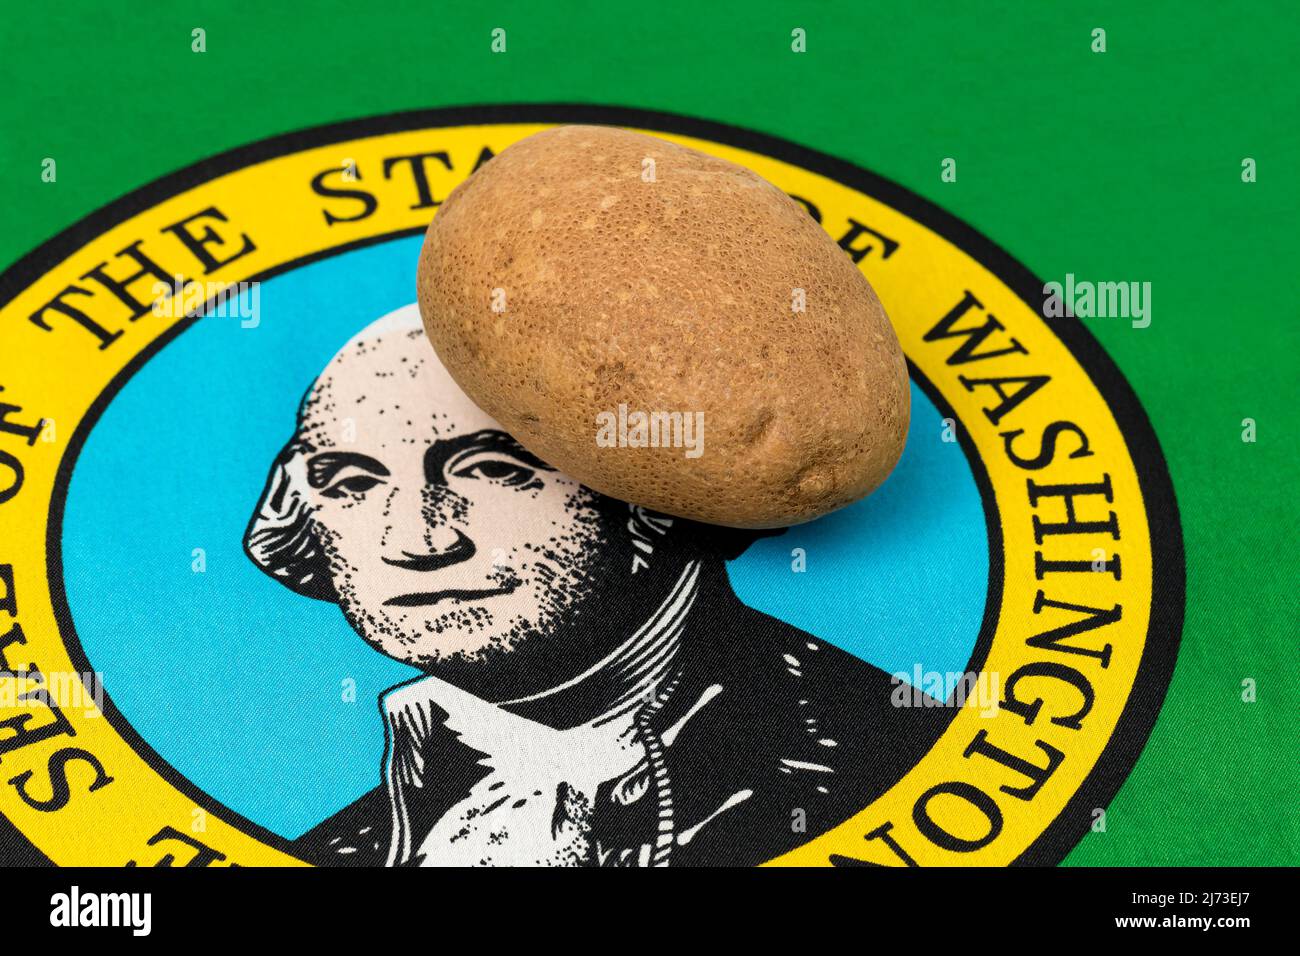 Russet Potato with Washington state flag. Potato farming production, trade and exports concept. Stock Photo